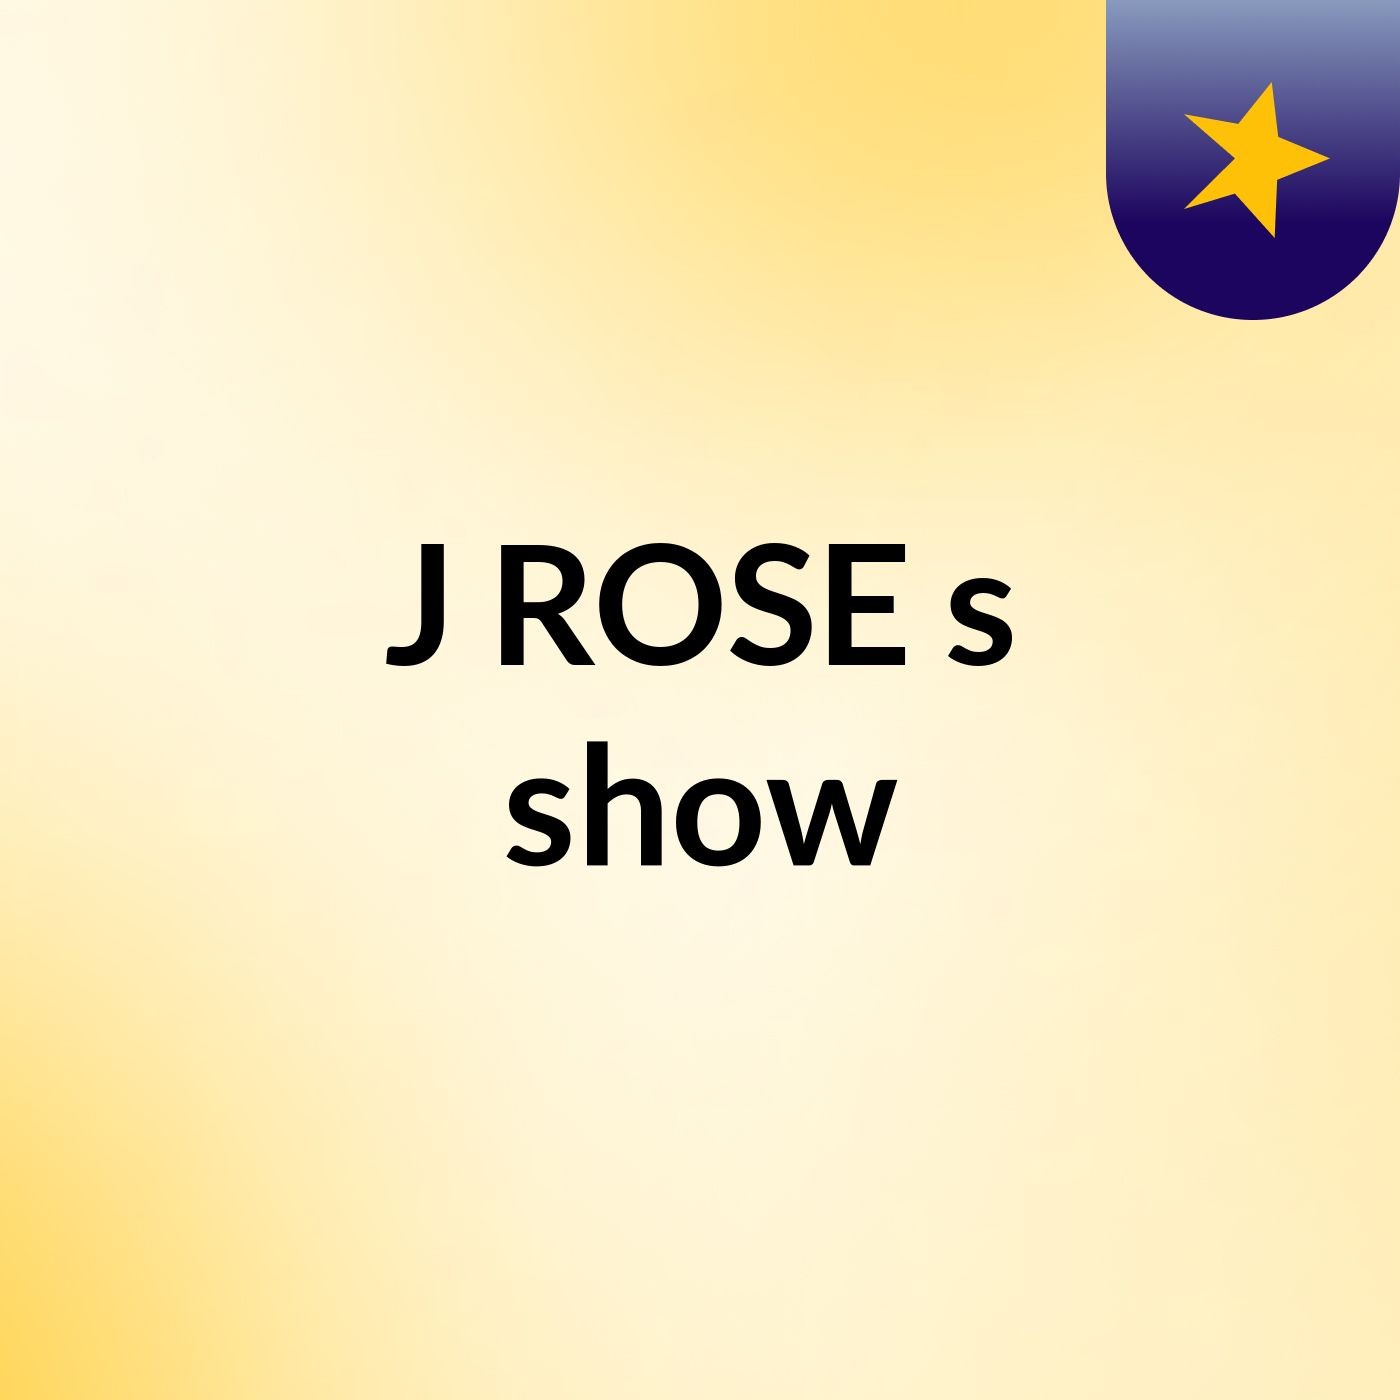 J ROSE's show